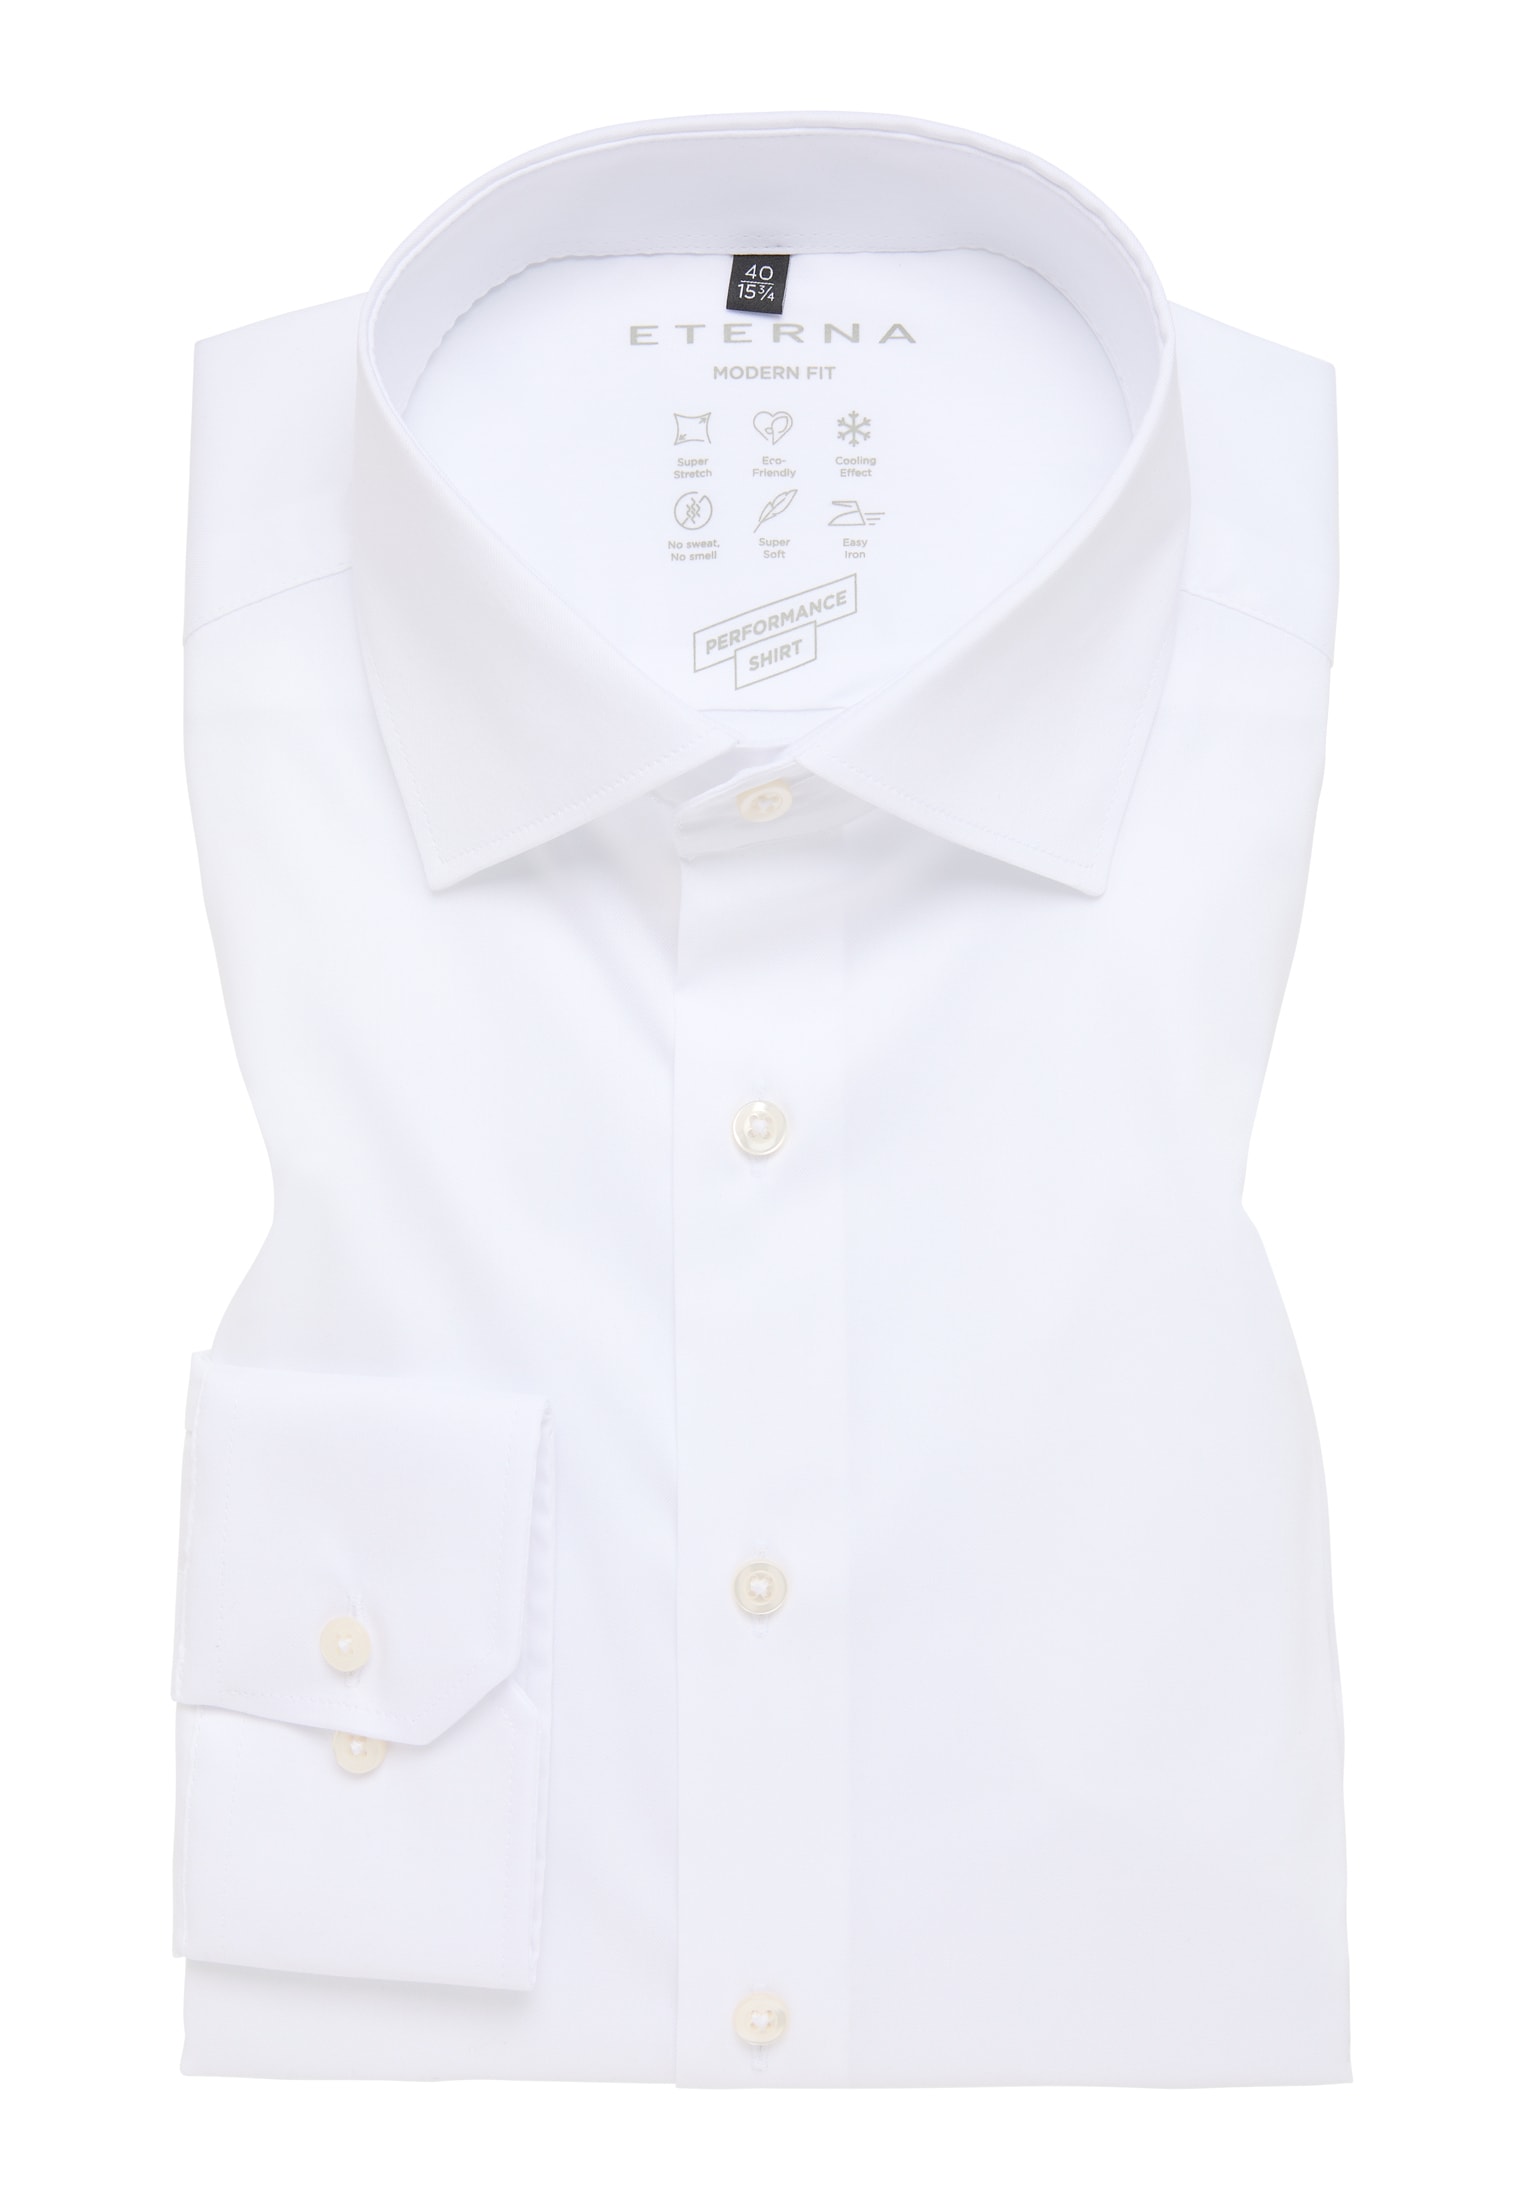 MODERN FIT Performance Shirt in Langarm | | 1SH02224-00-01-40-1/1 40 weiß | unifarben | weiß